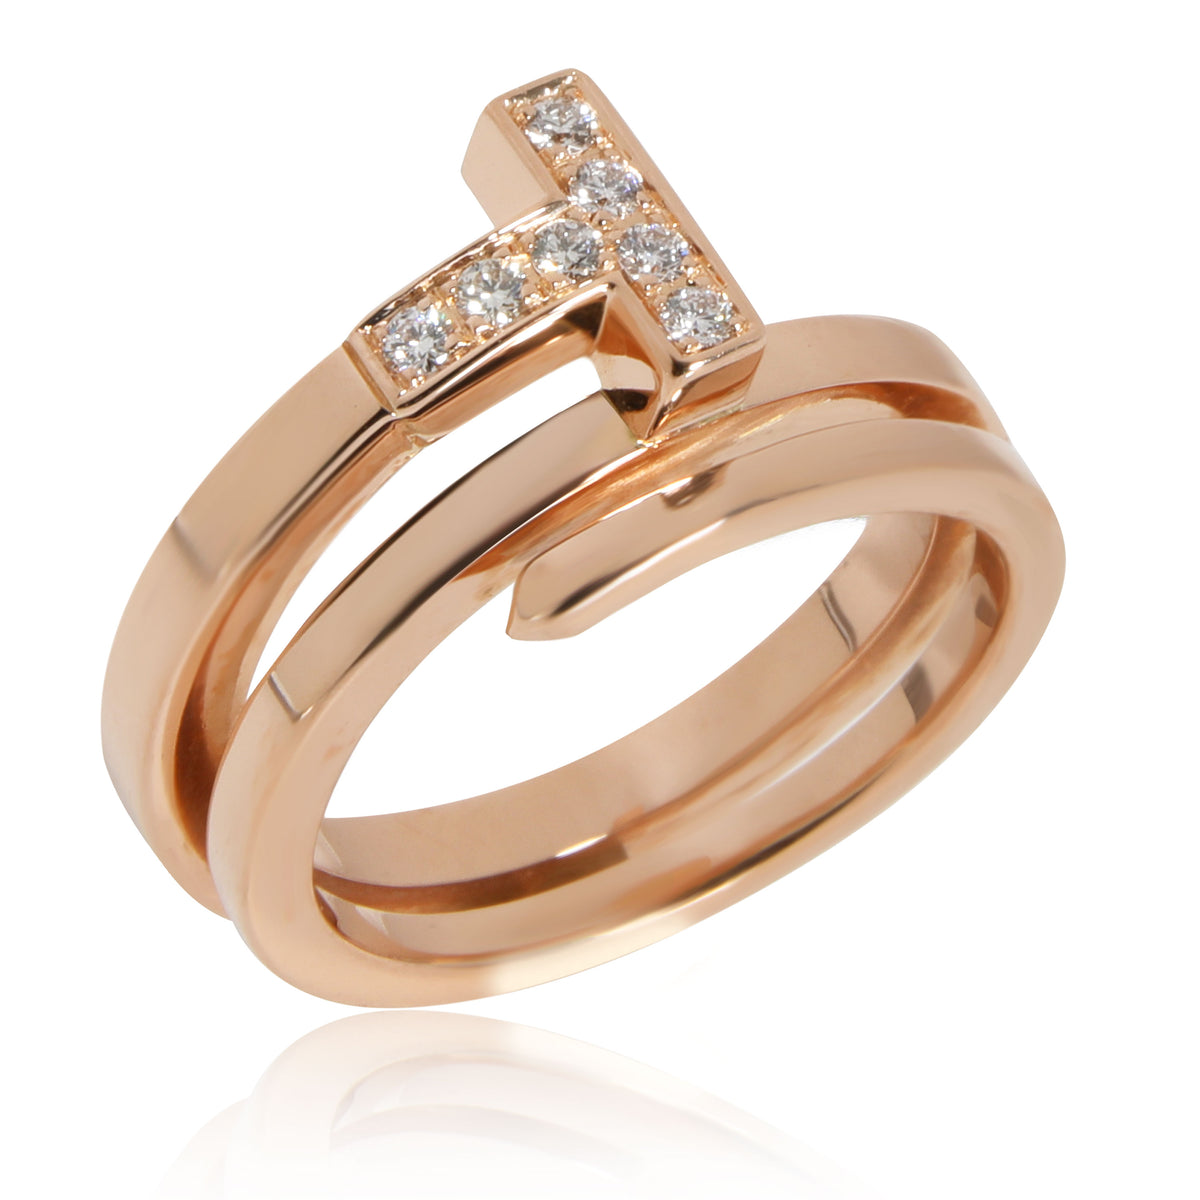 Tiffany & Co. T Wrap Diamond Ring in 18K Rose Gold 0.10 CTW